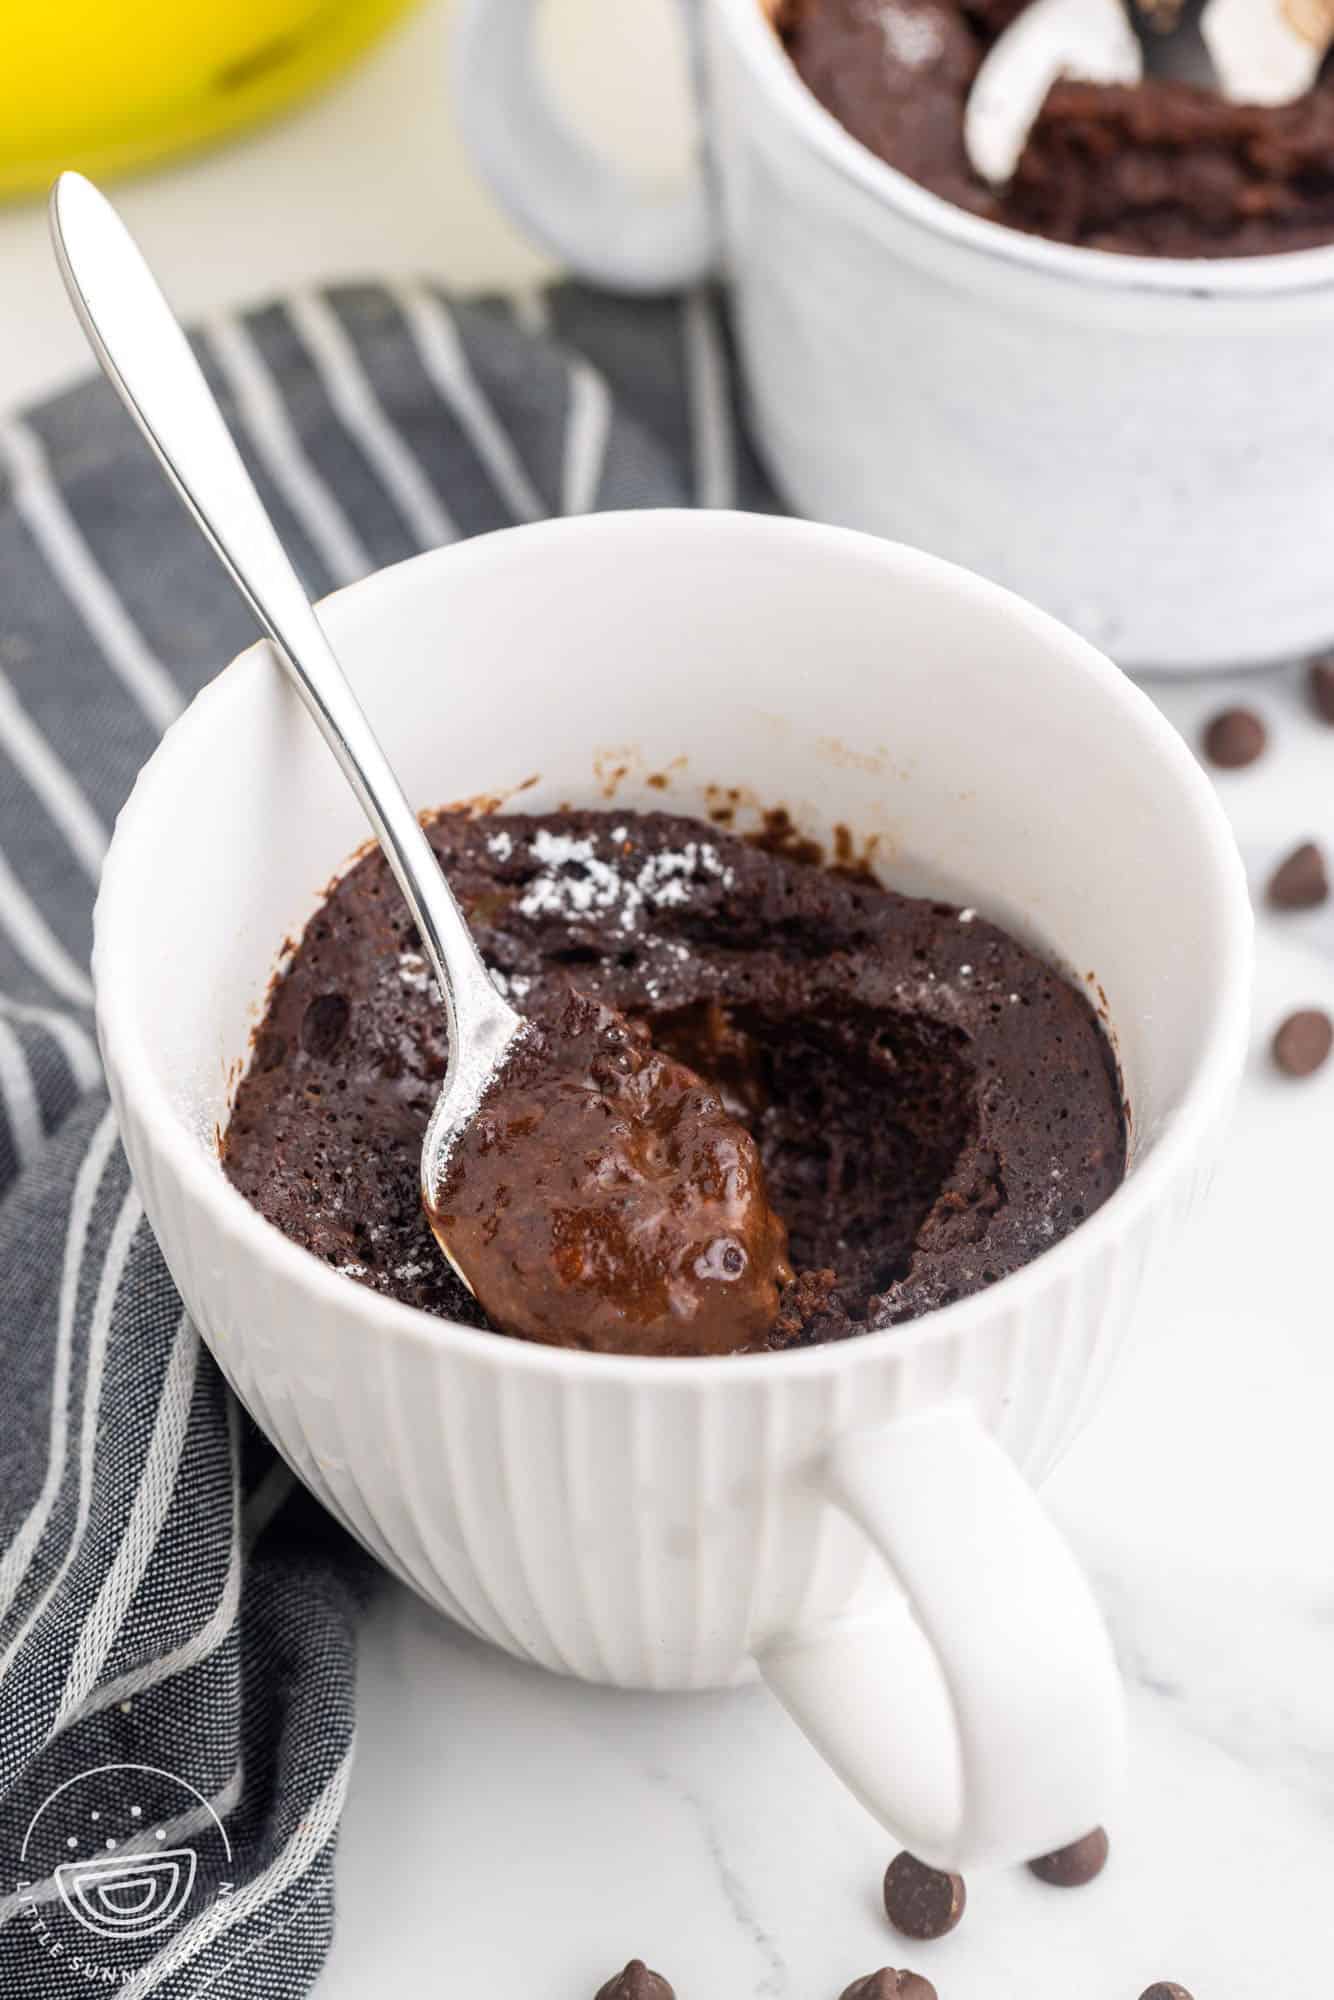 Angle shot of chocolate lava cake in a white mug and a spoon